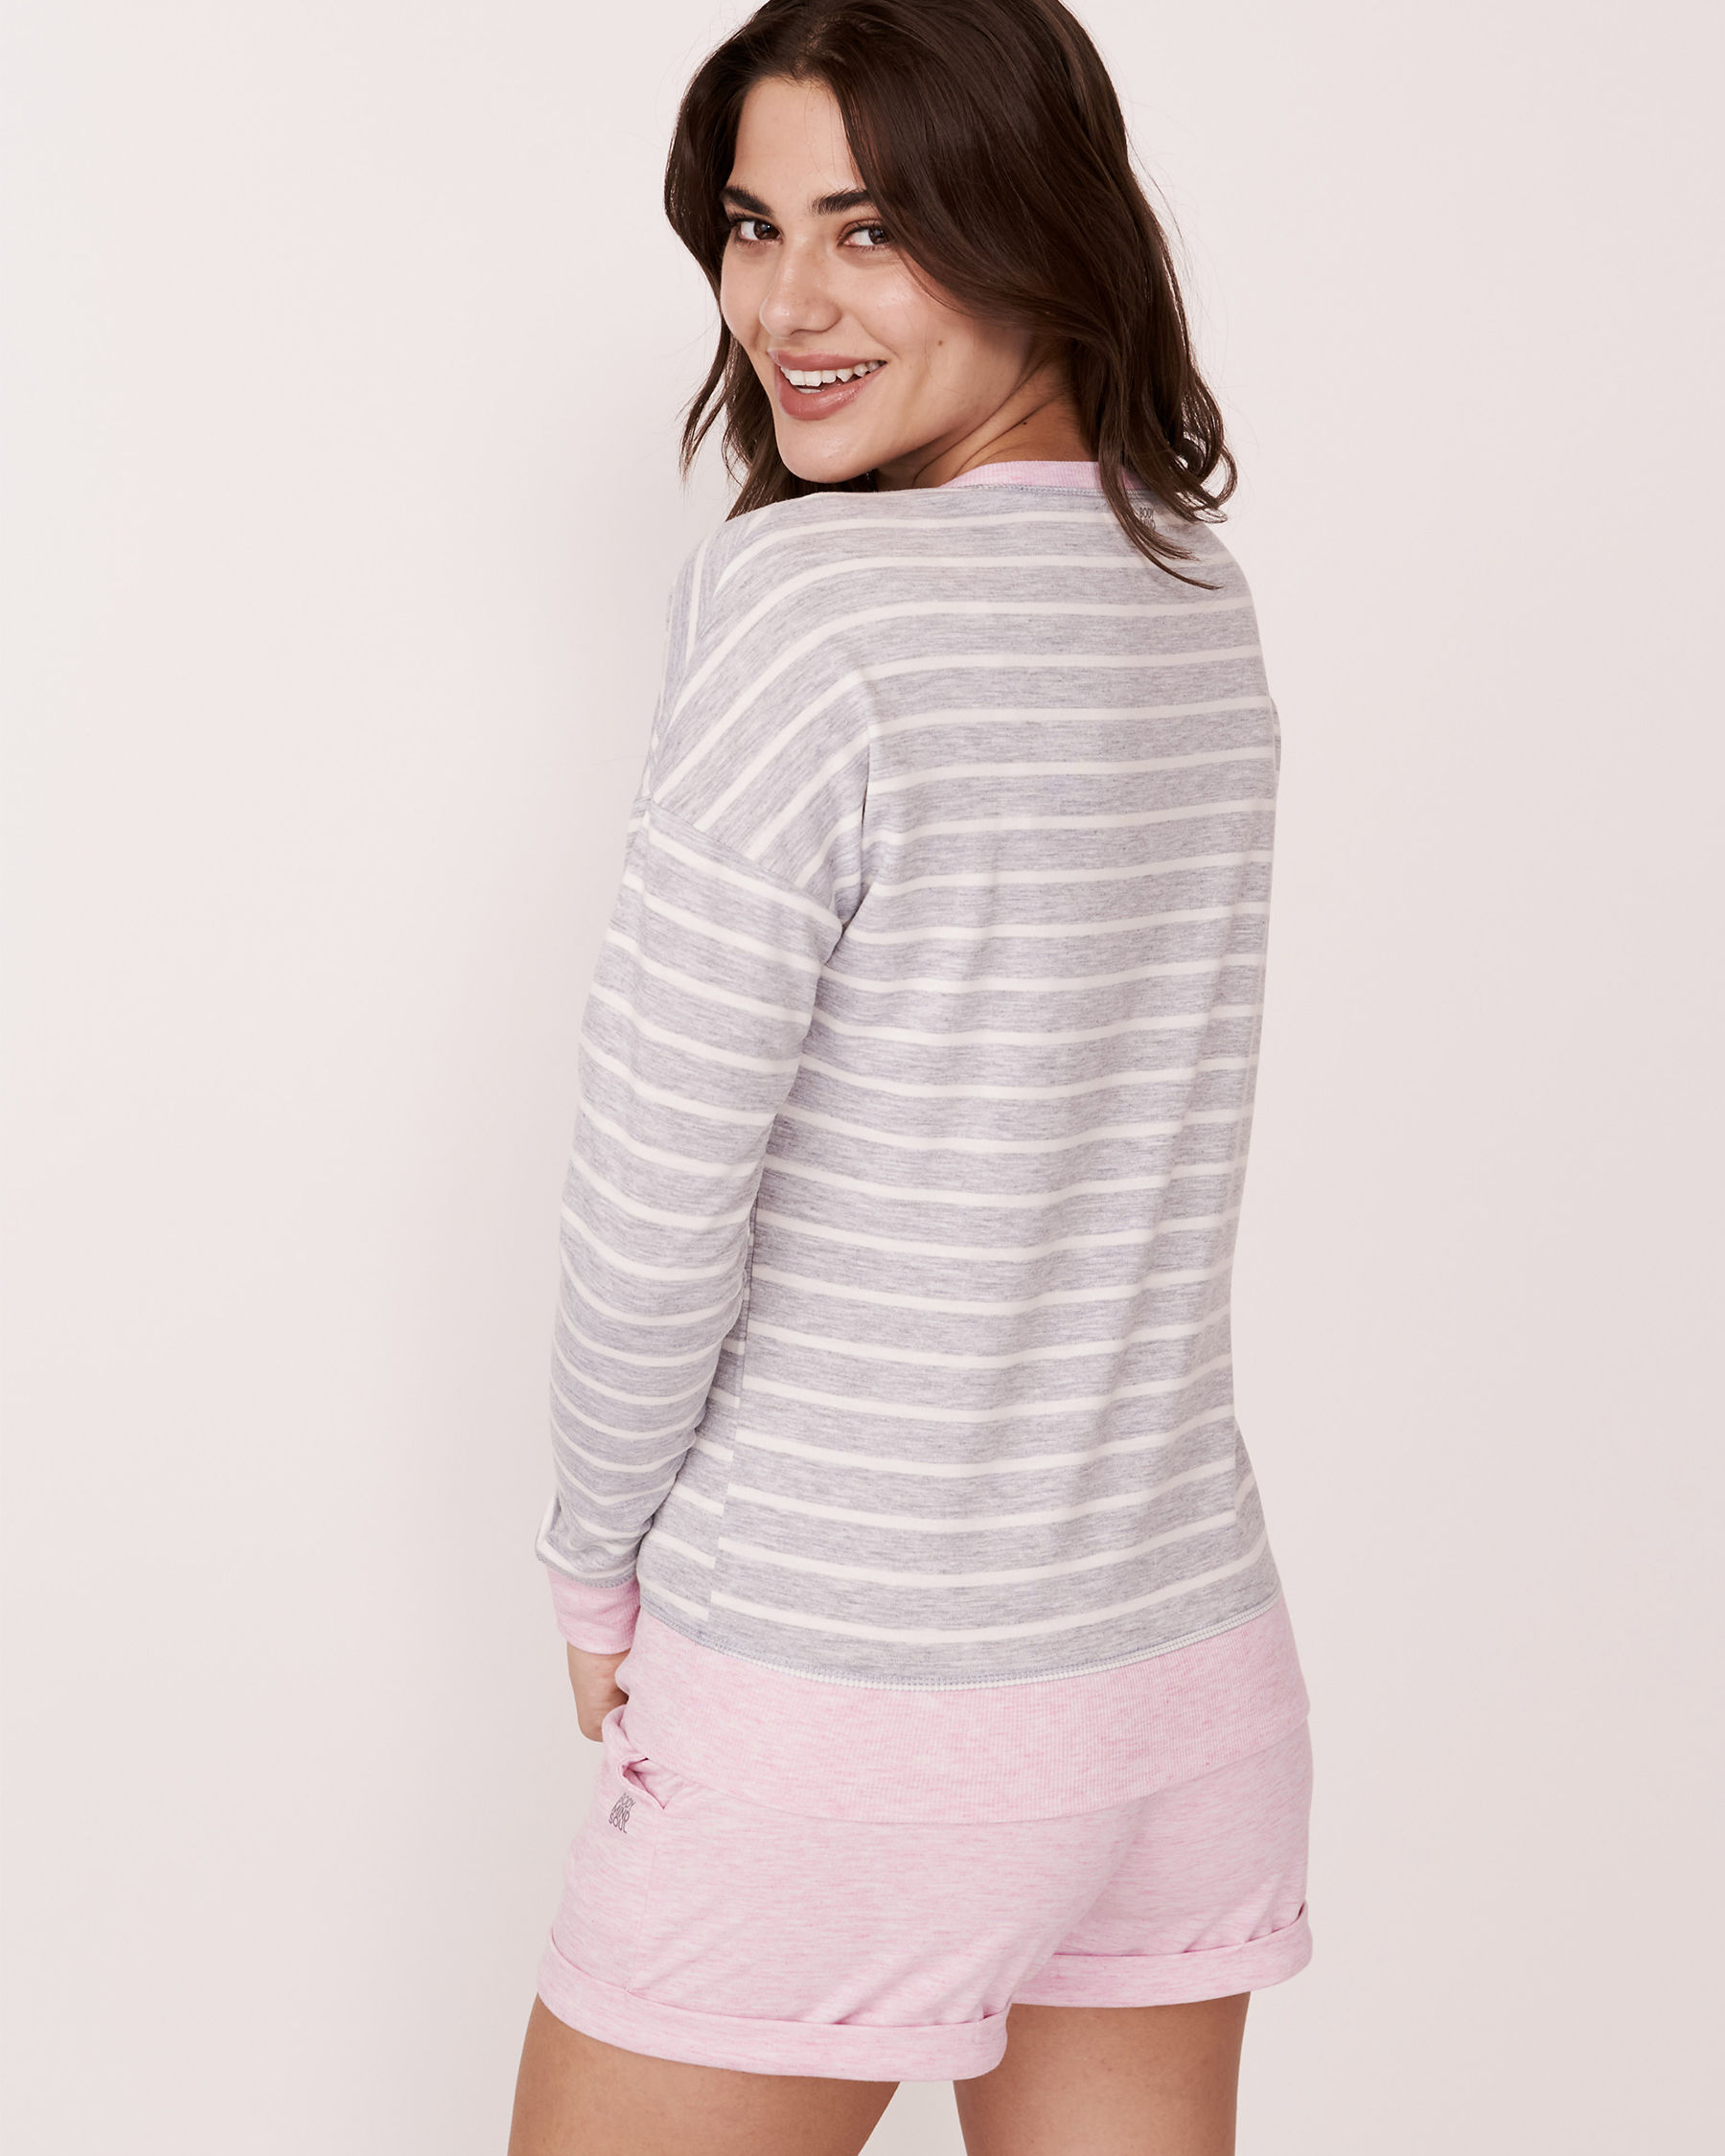 LA VIE EN ROSE Textured Long Sleeve Shirt Stripes 768-373-1-11 - View2